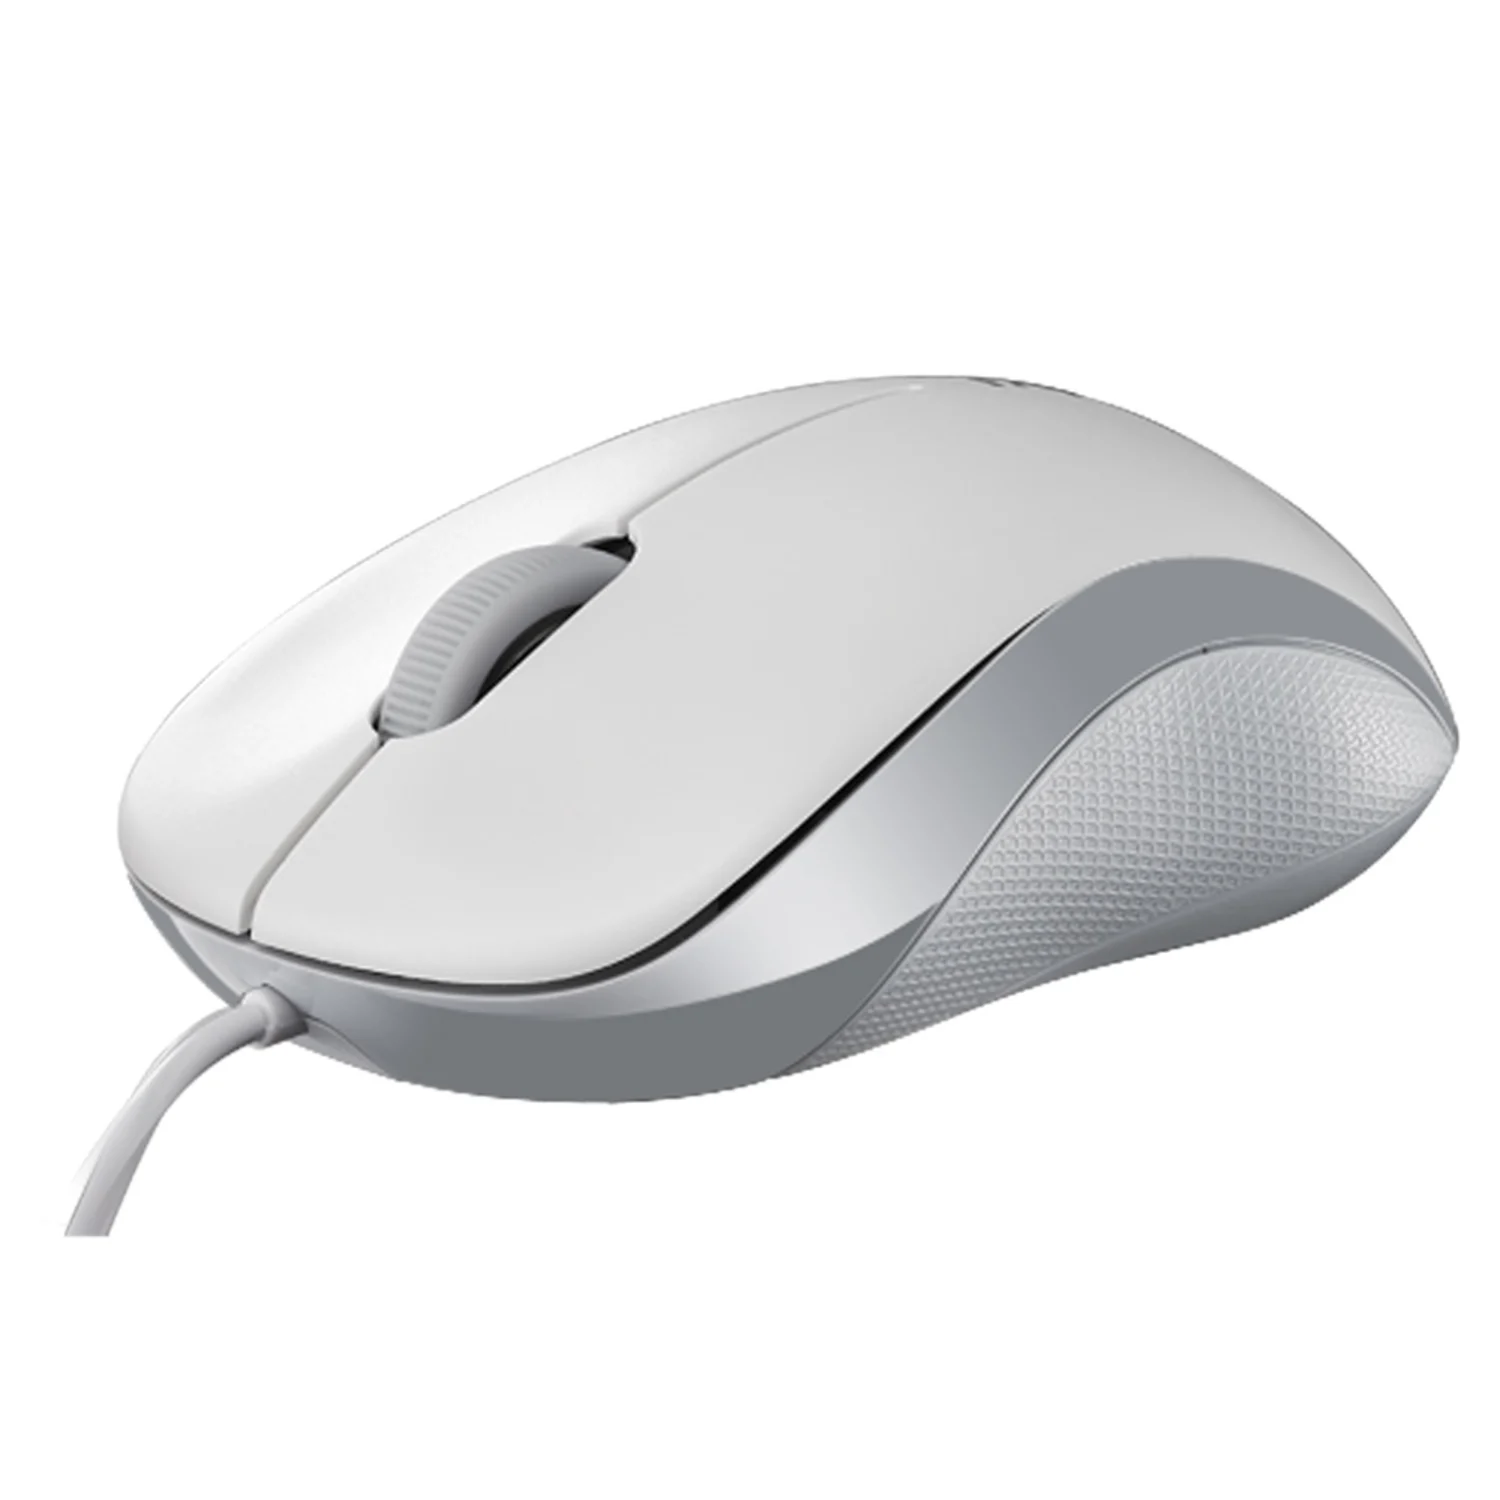 Mouse Rapoo N1130 / 1000dpi - Branco